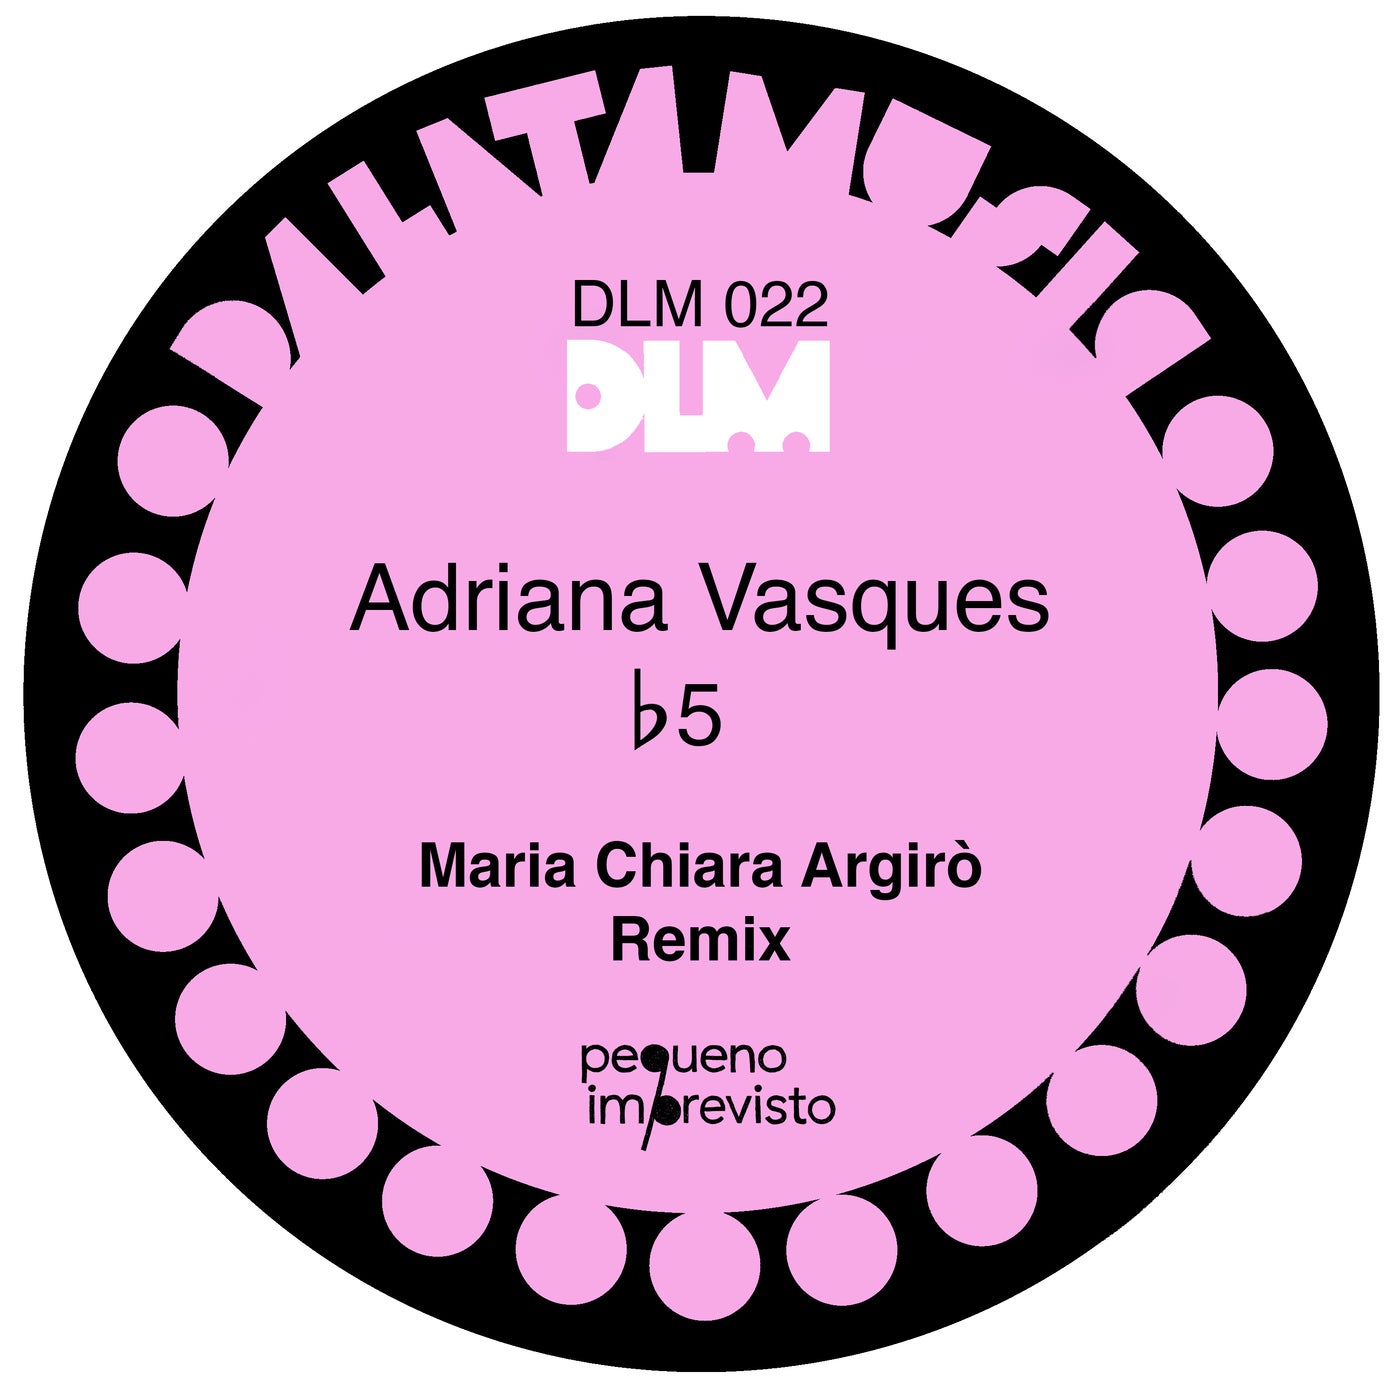 b5 - Maria Chiara Argirò Remix